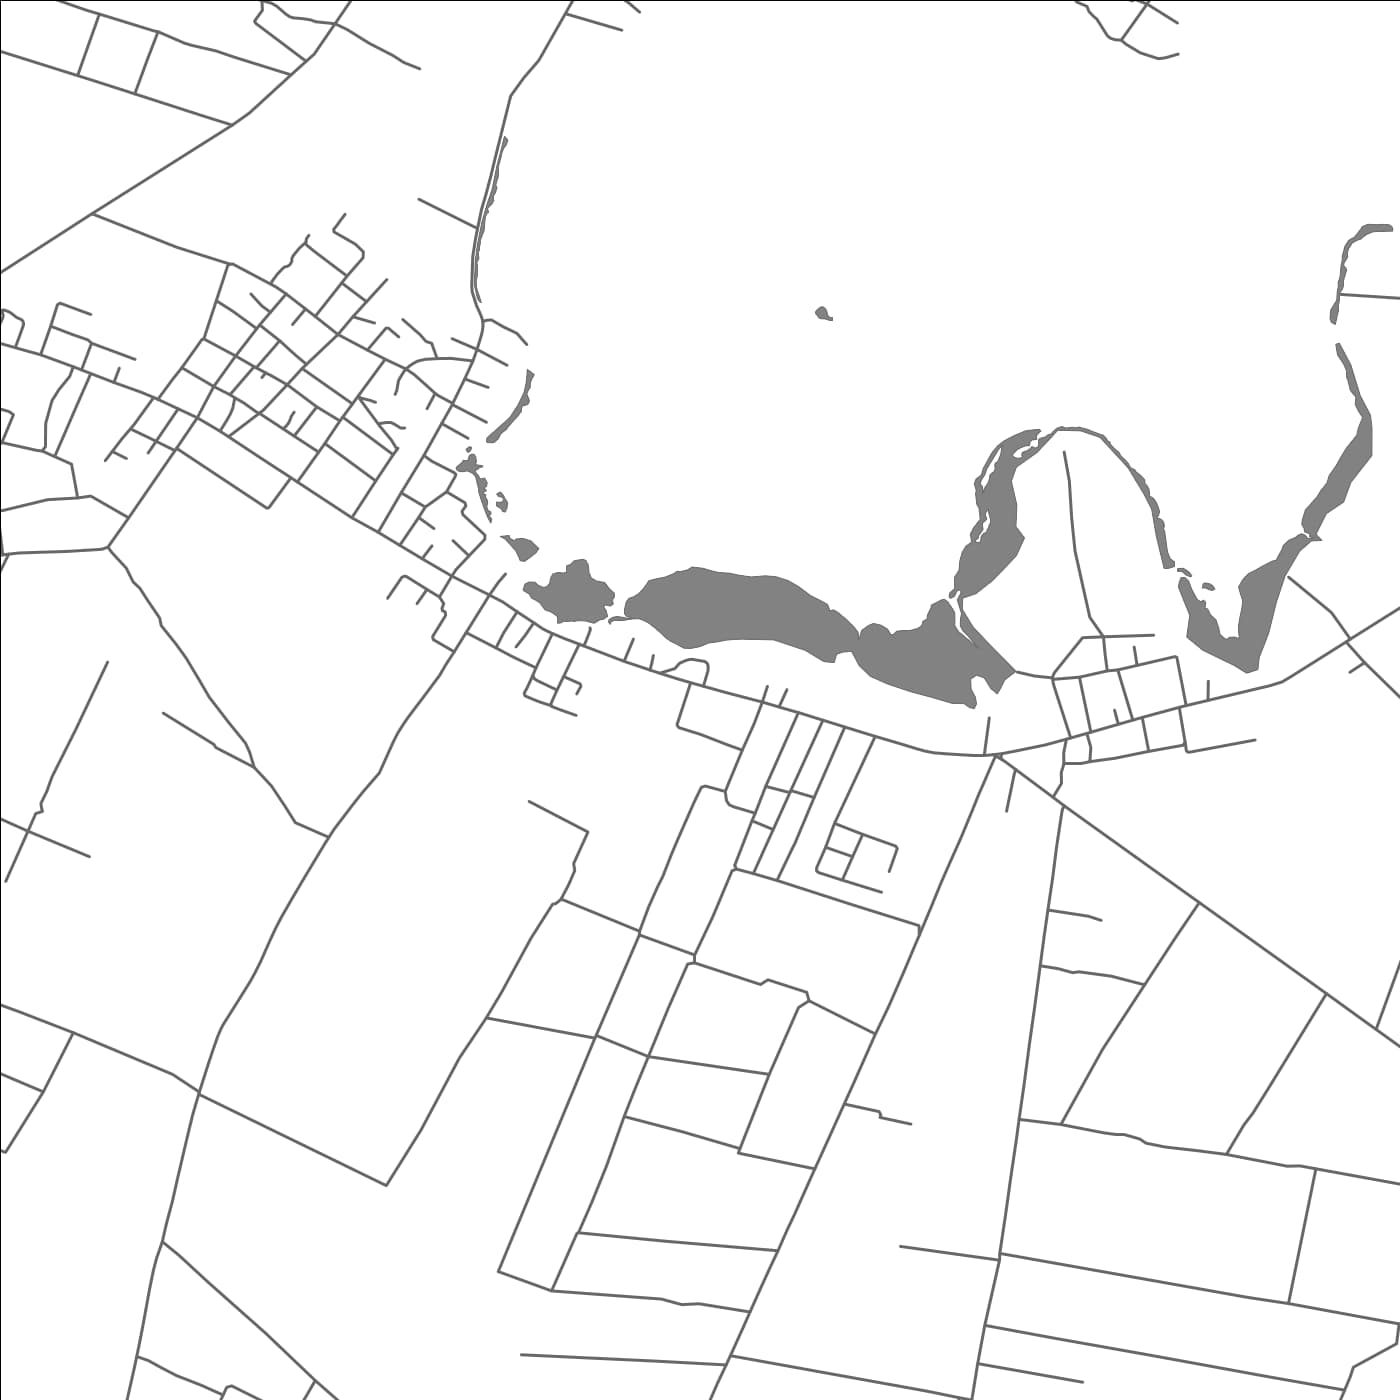 ROAD MAP OF KOLOFUU, TONGA BY MAPBAKES